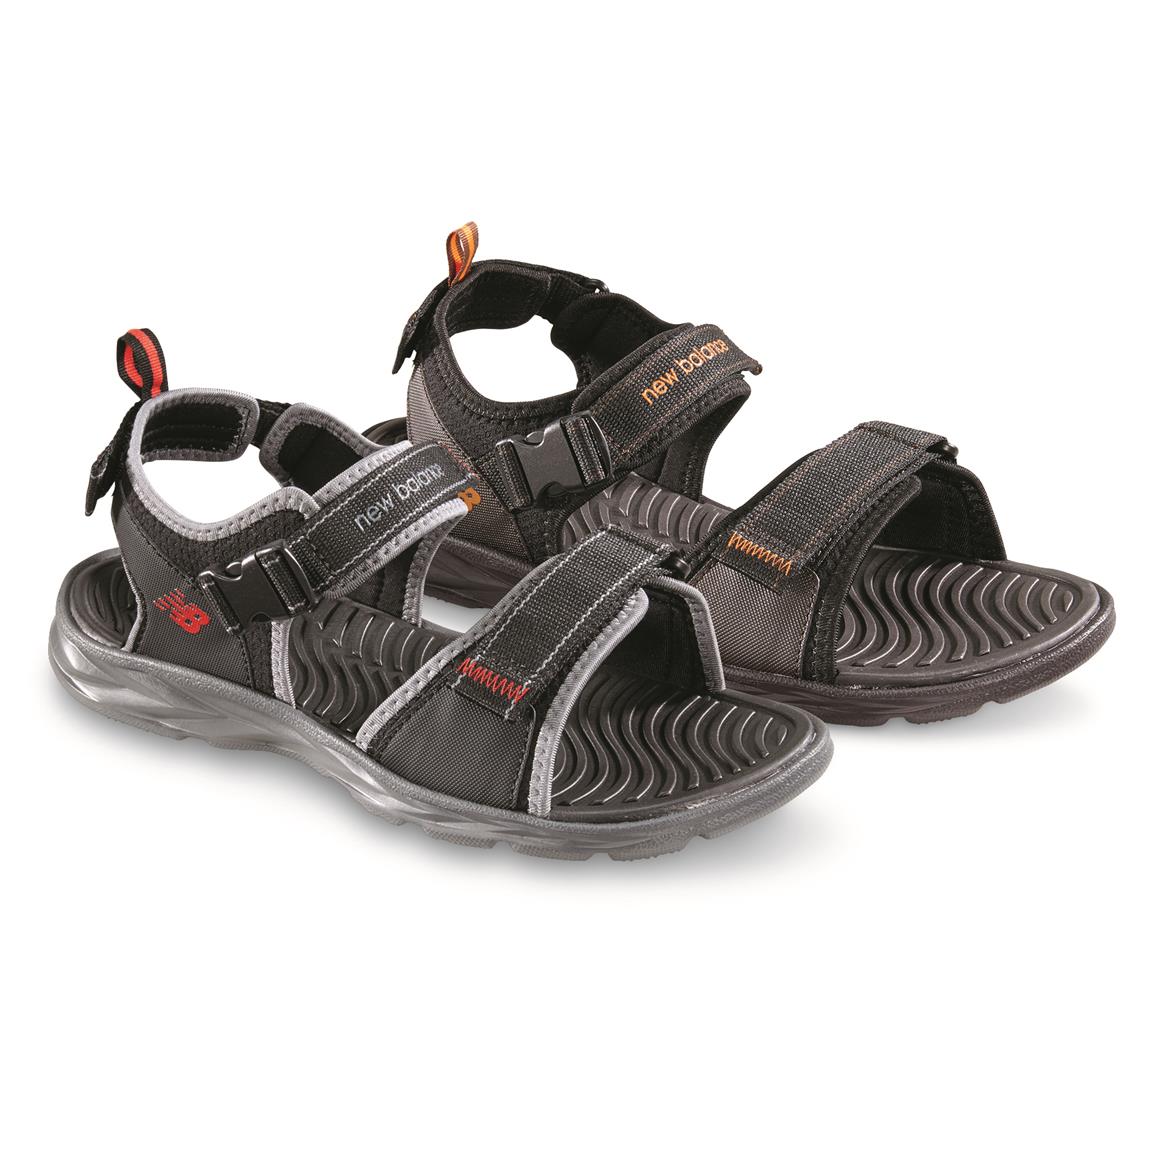 New Balance Men's Response Sandals - 676428, Sandals & Flip Flops at ...